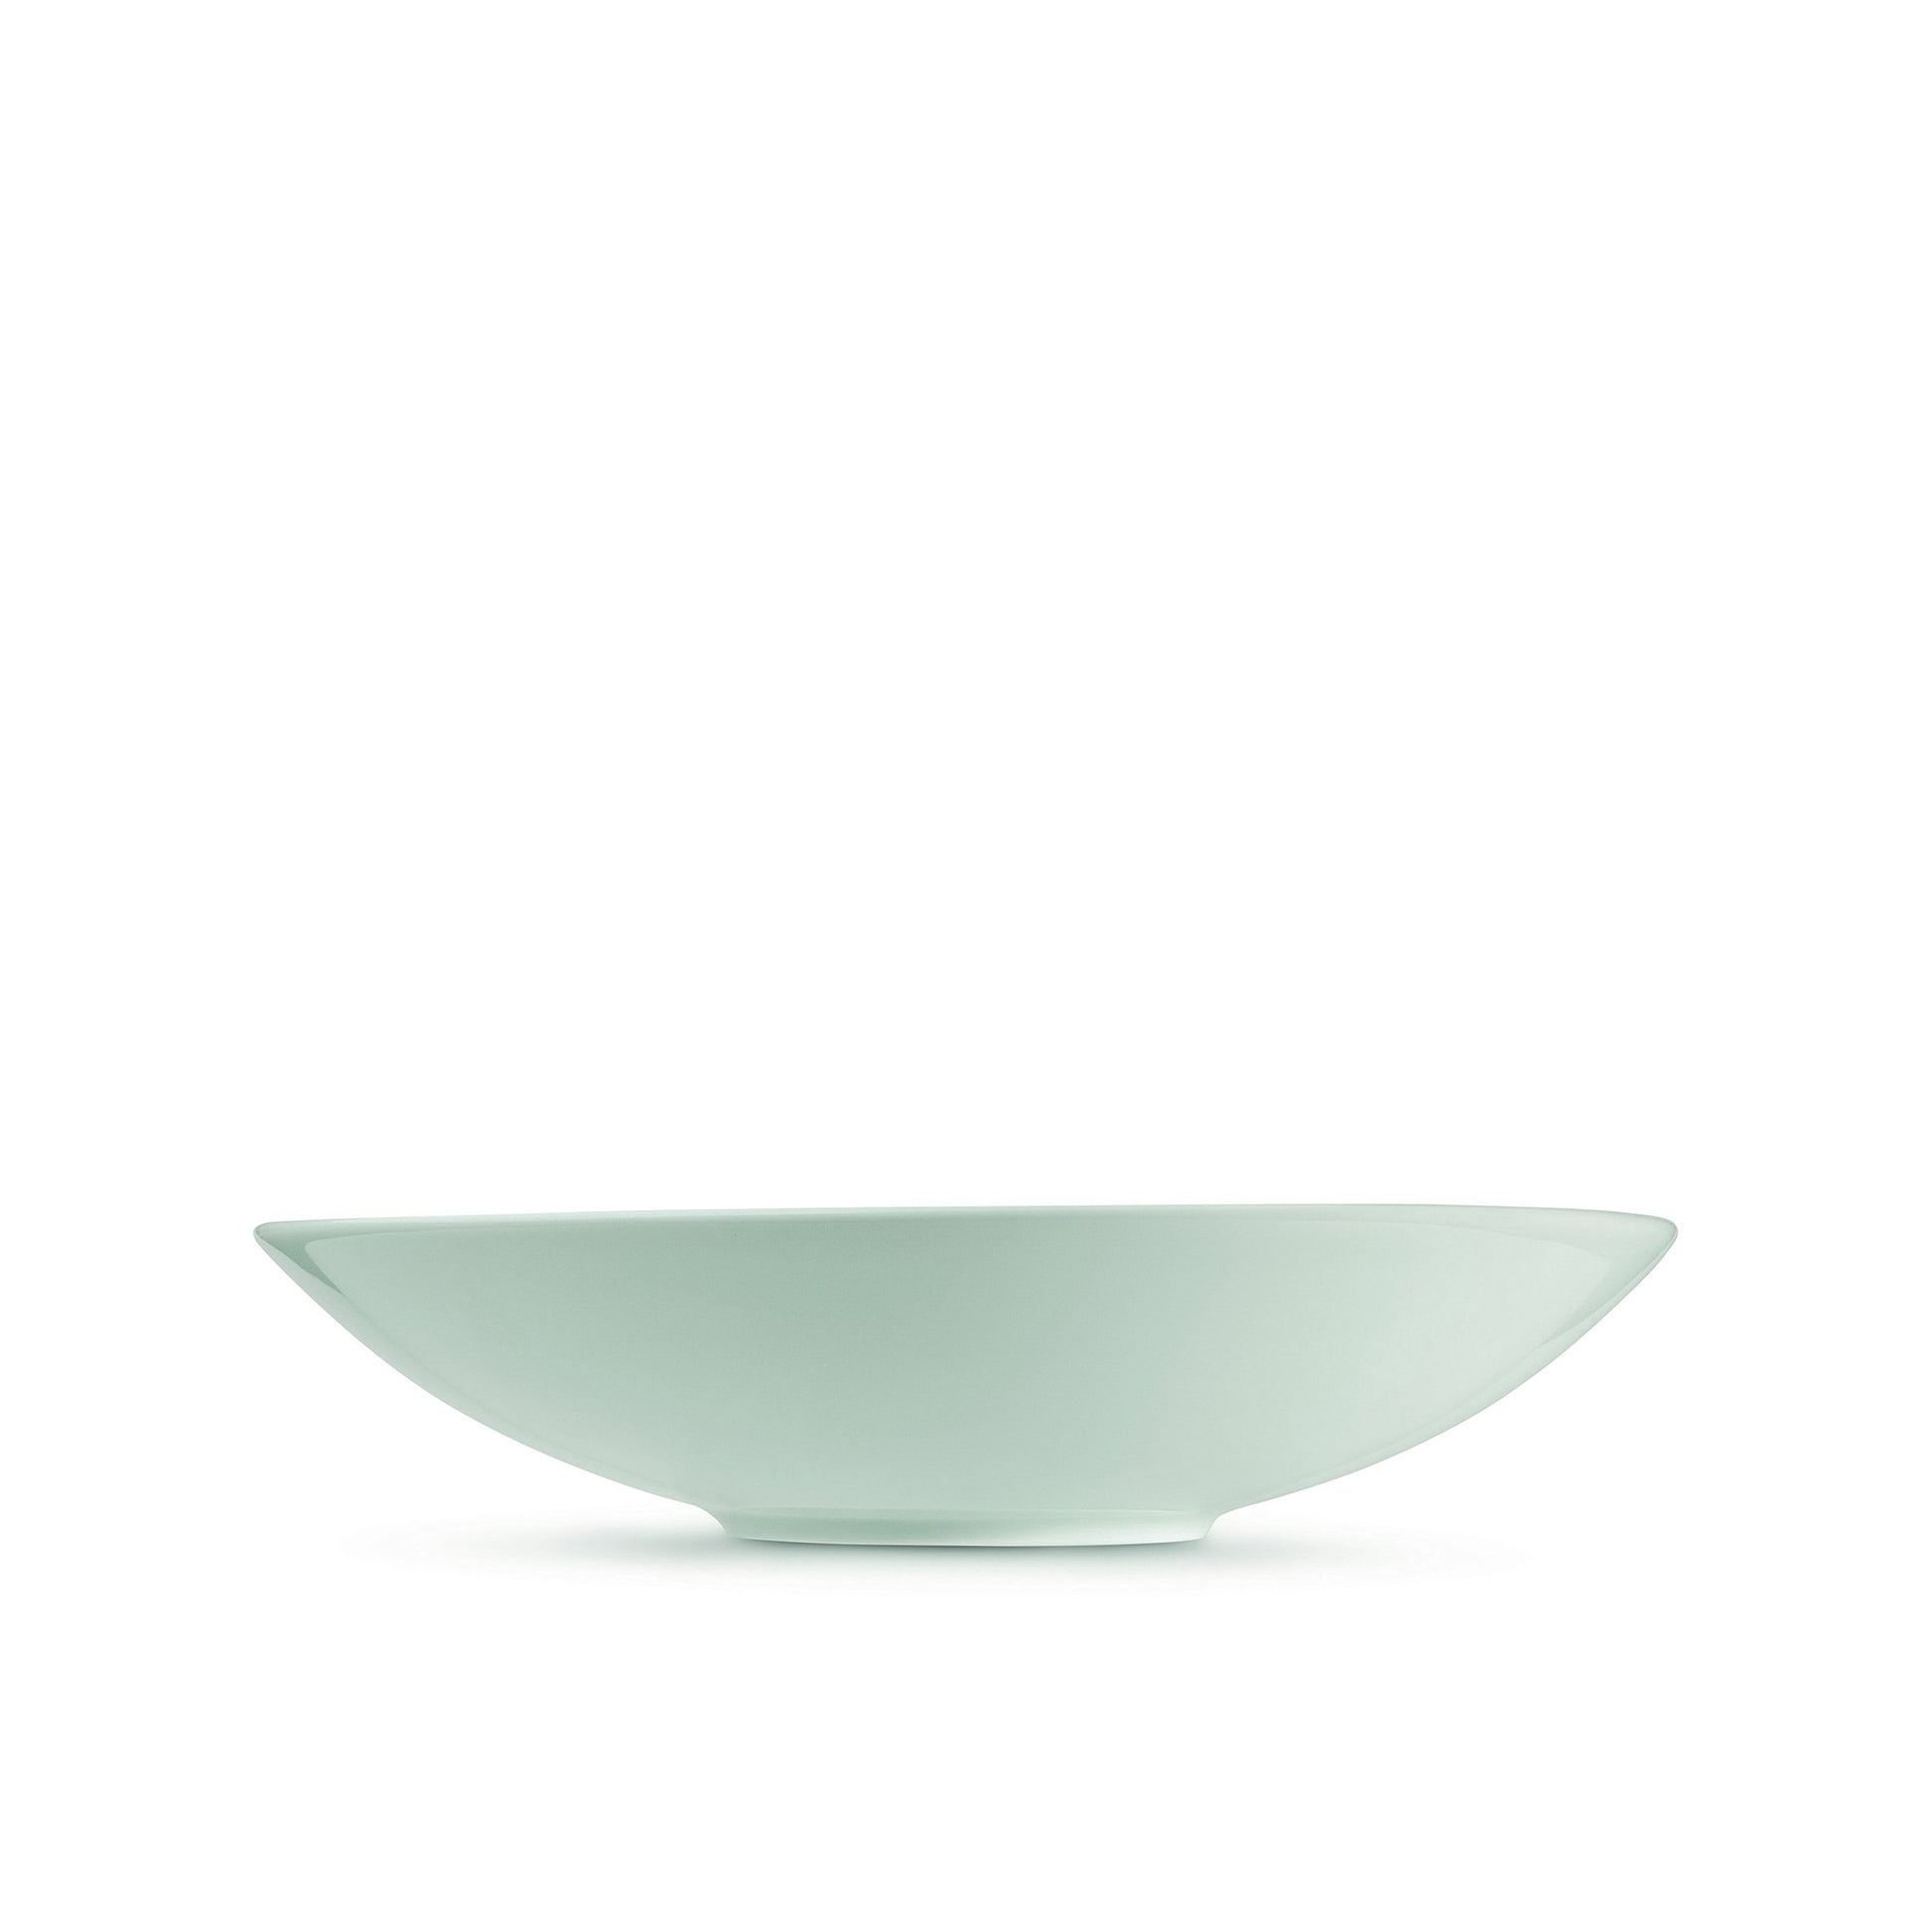 10" green celadon porcelain coupe bowl, pasta bowl, serving bowl, horizontal view, media 4 of 4